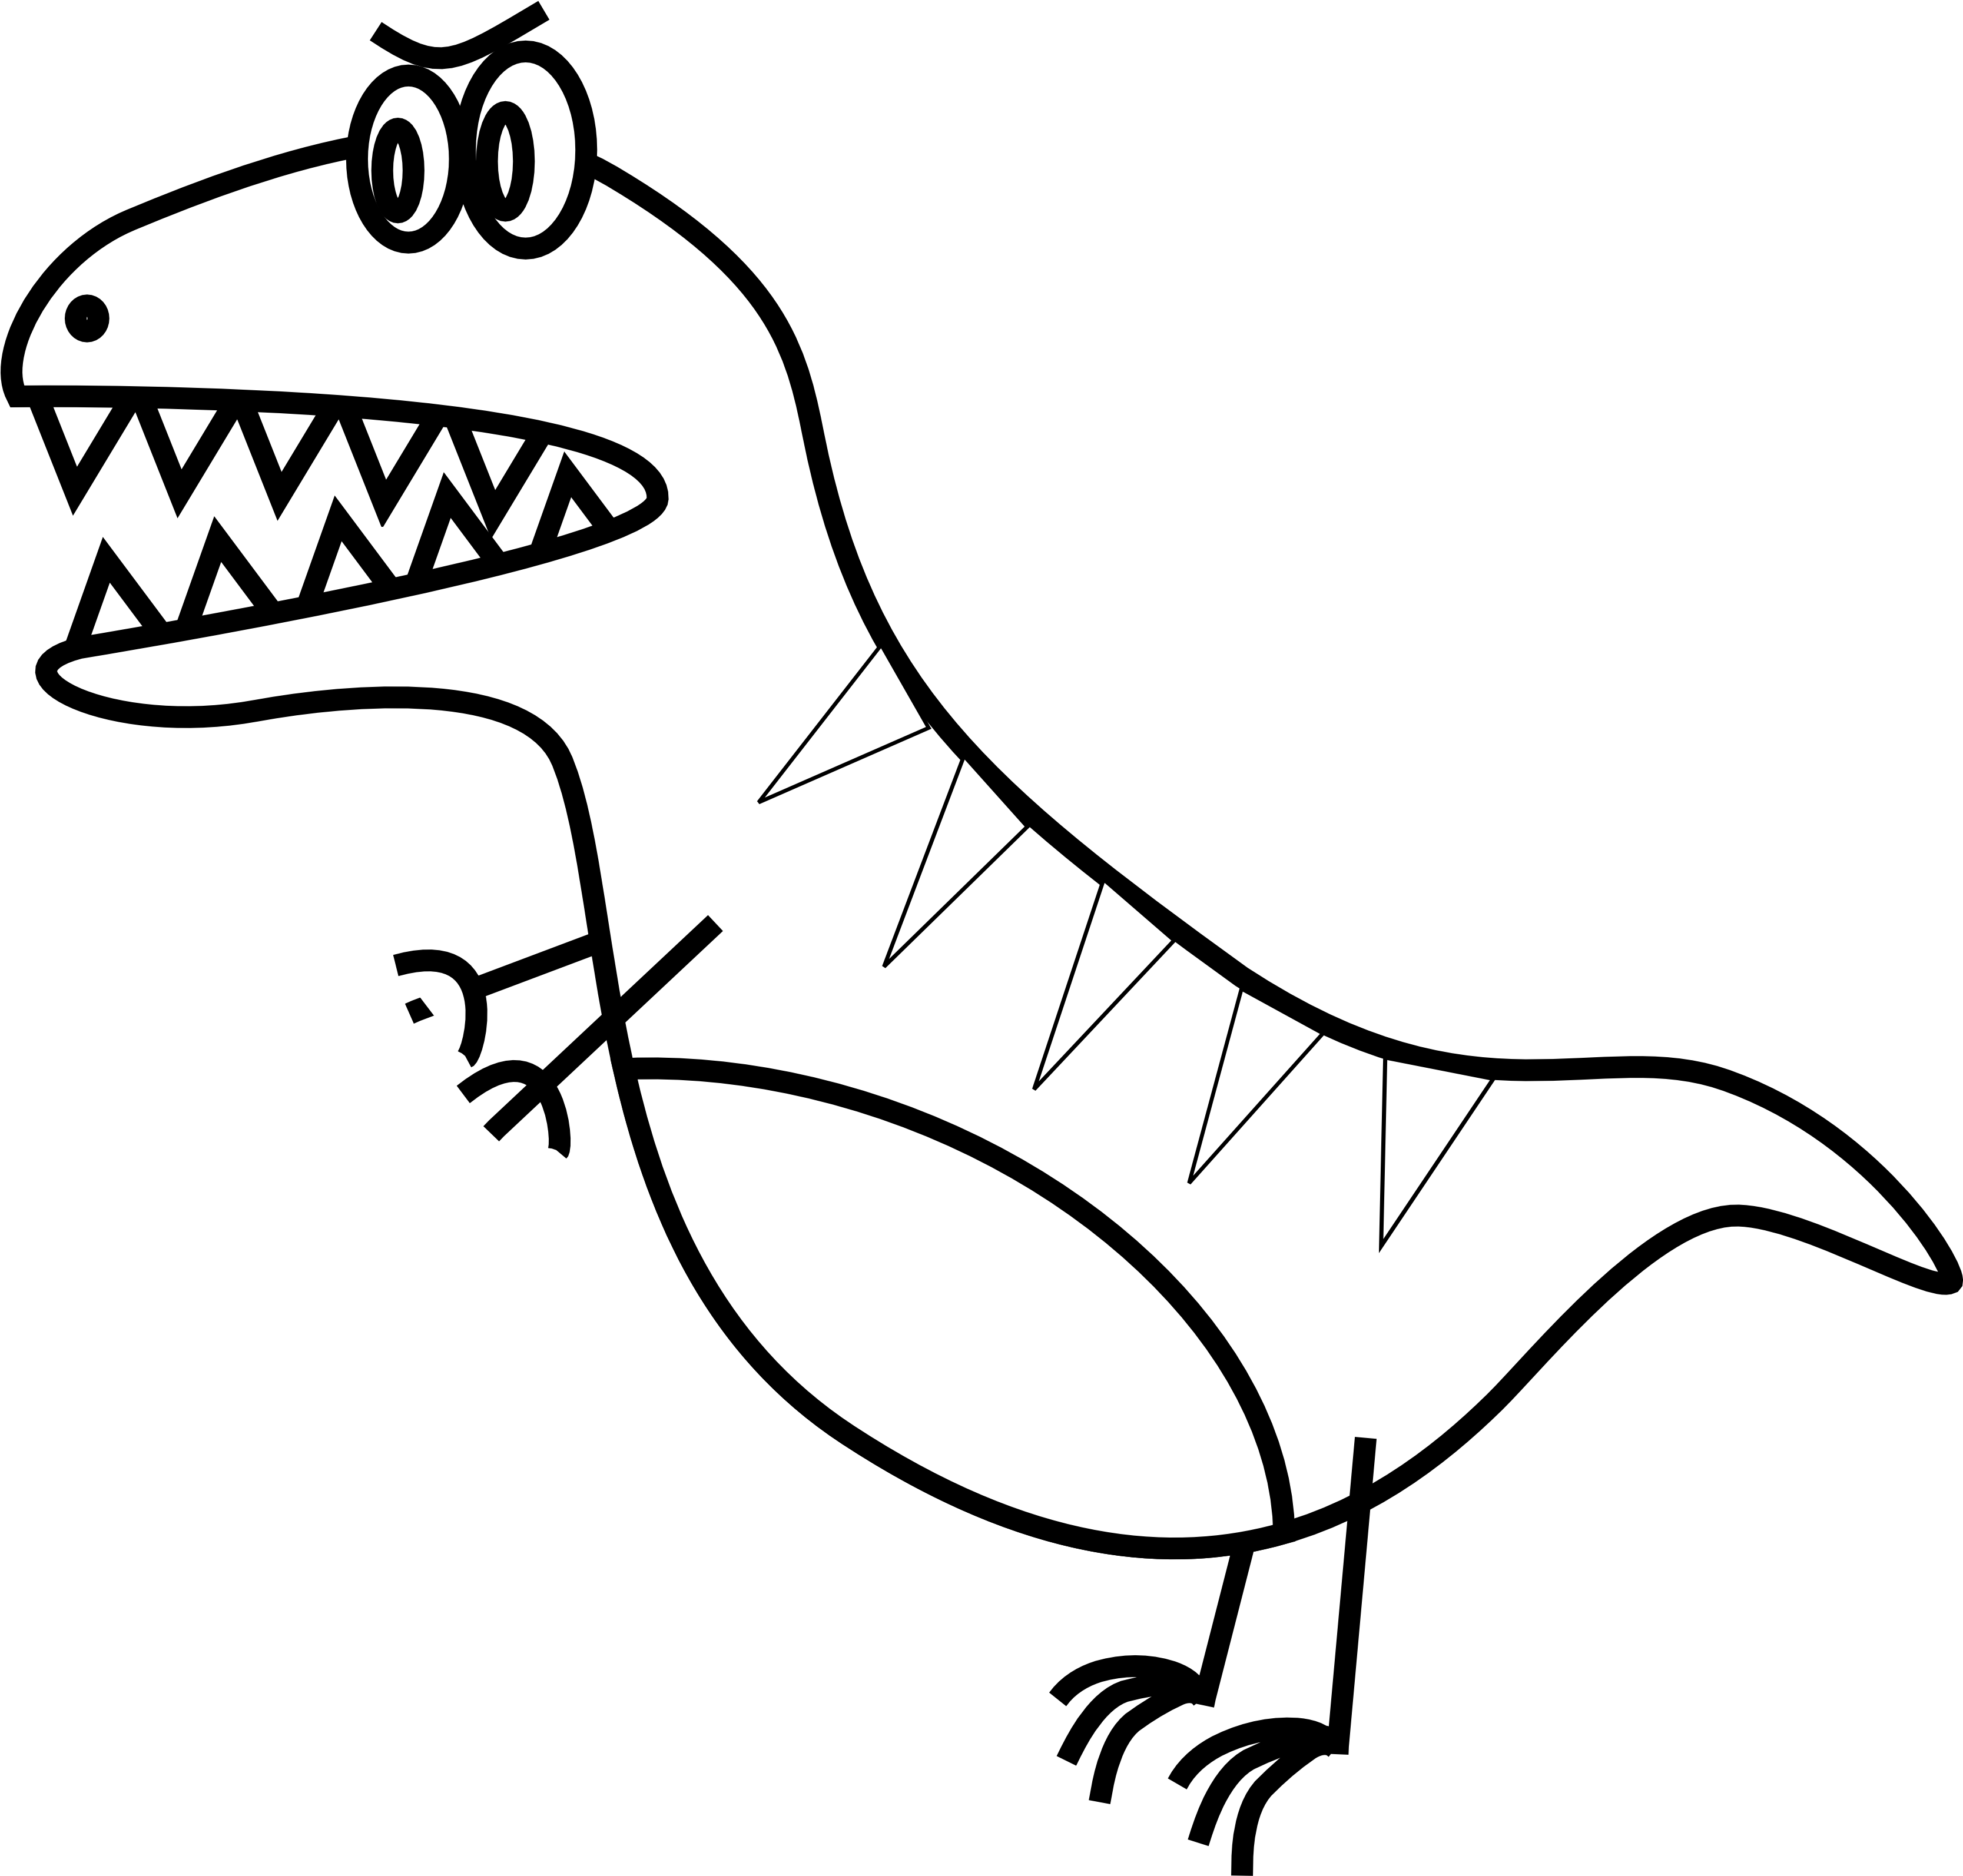 A White Dinosaur With Sharp Teeth